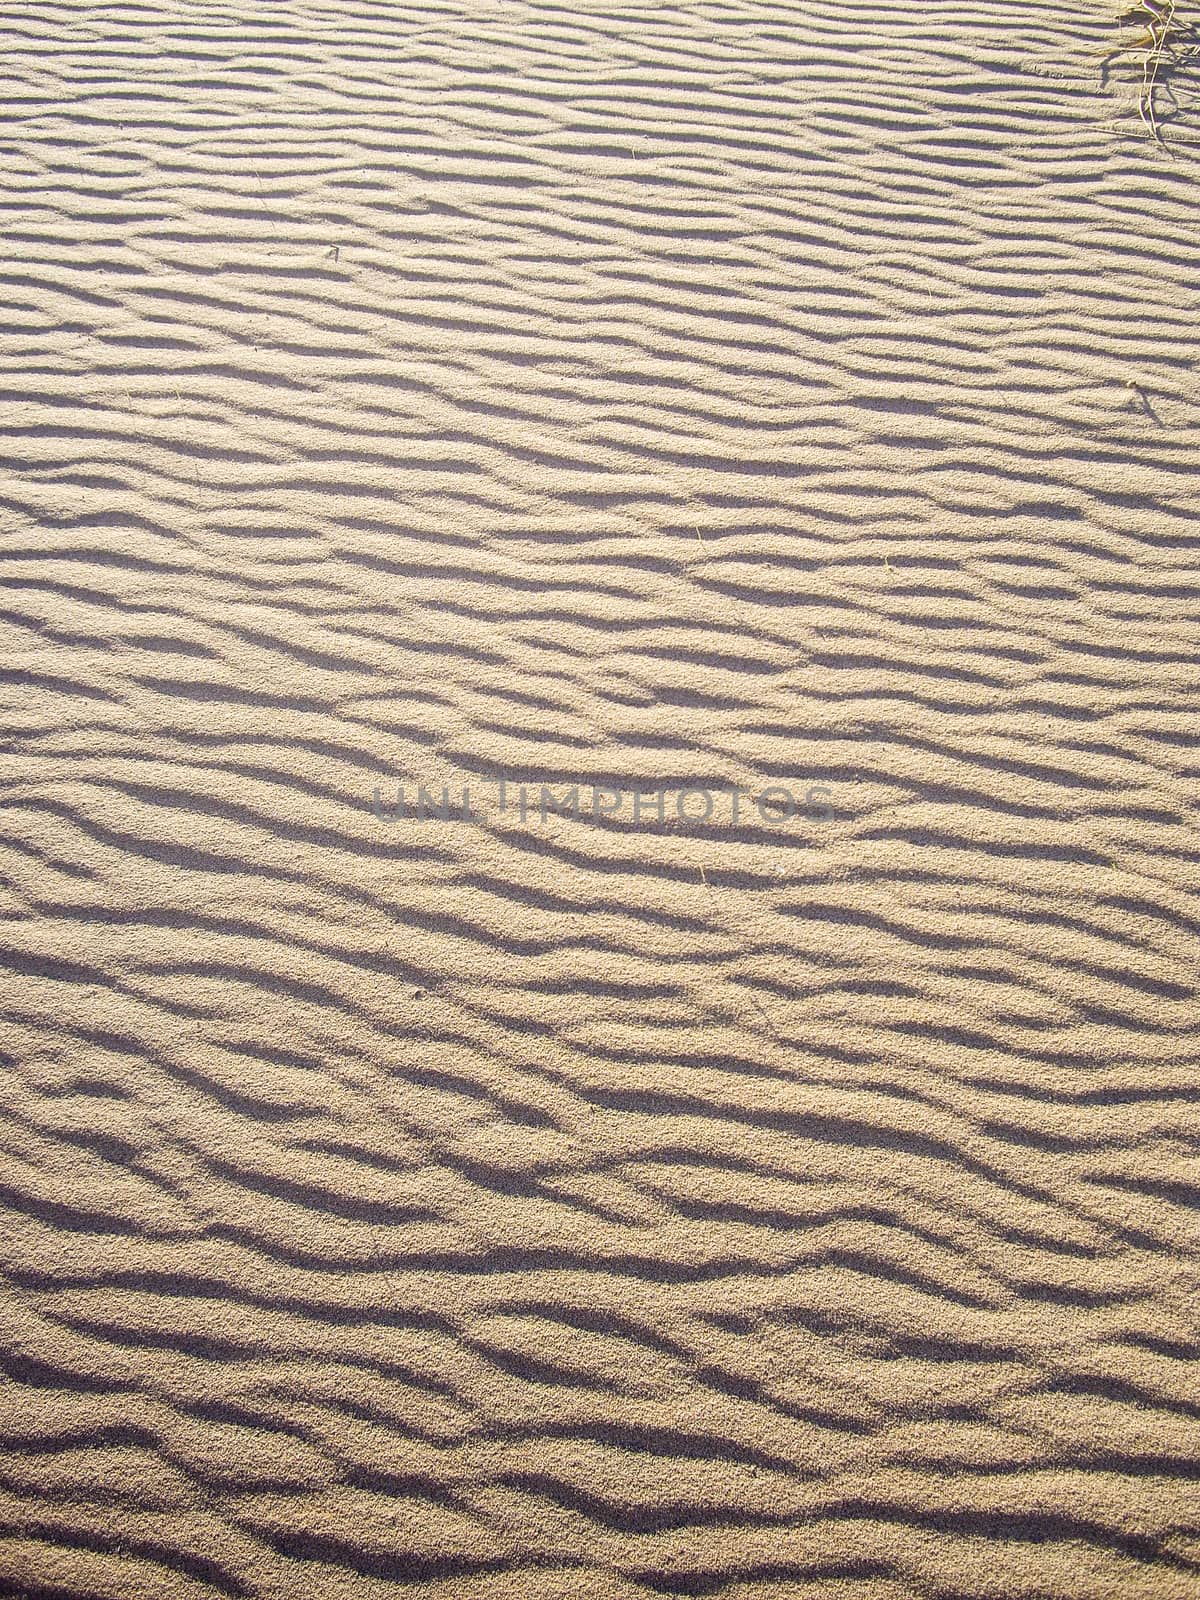 An ocean of sand by emattil